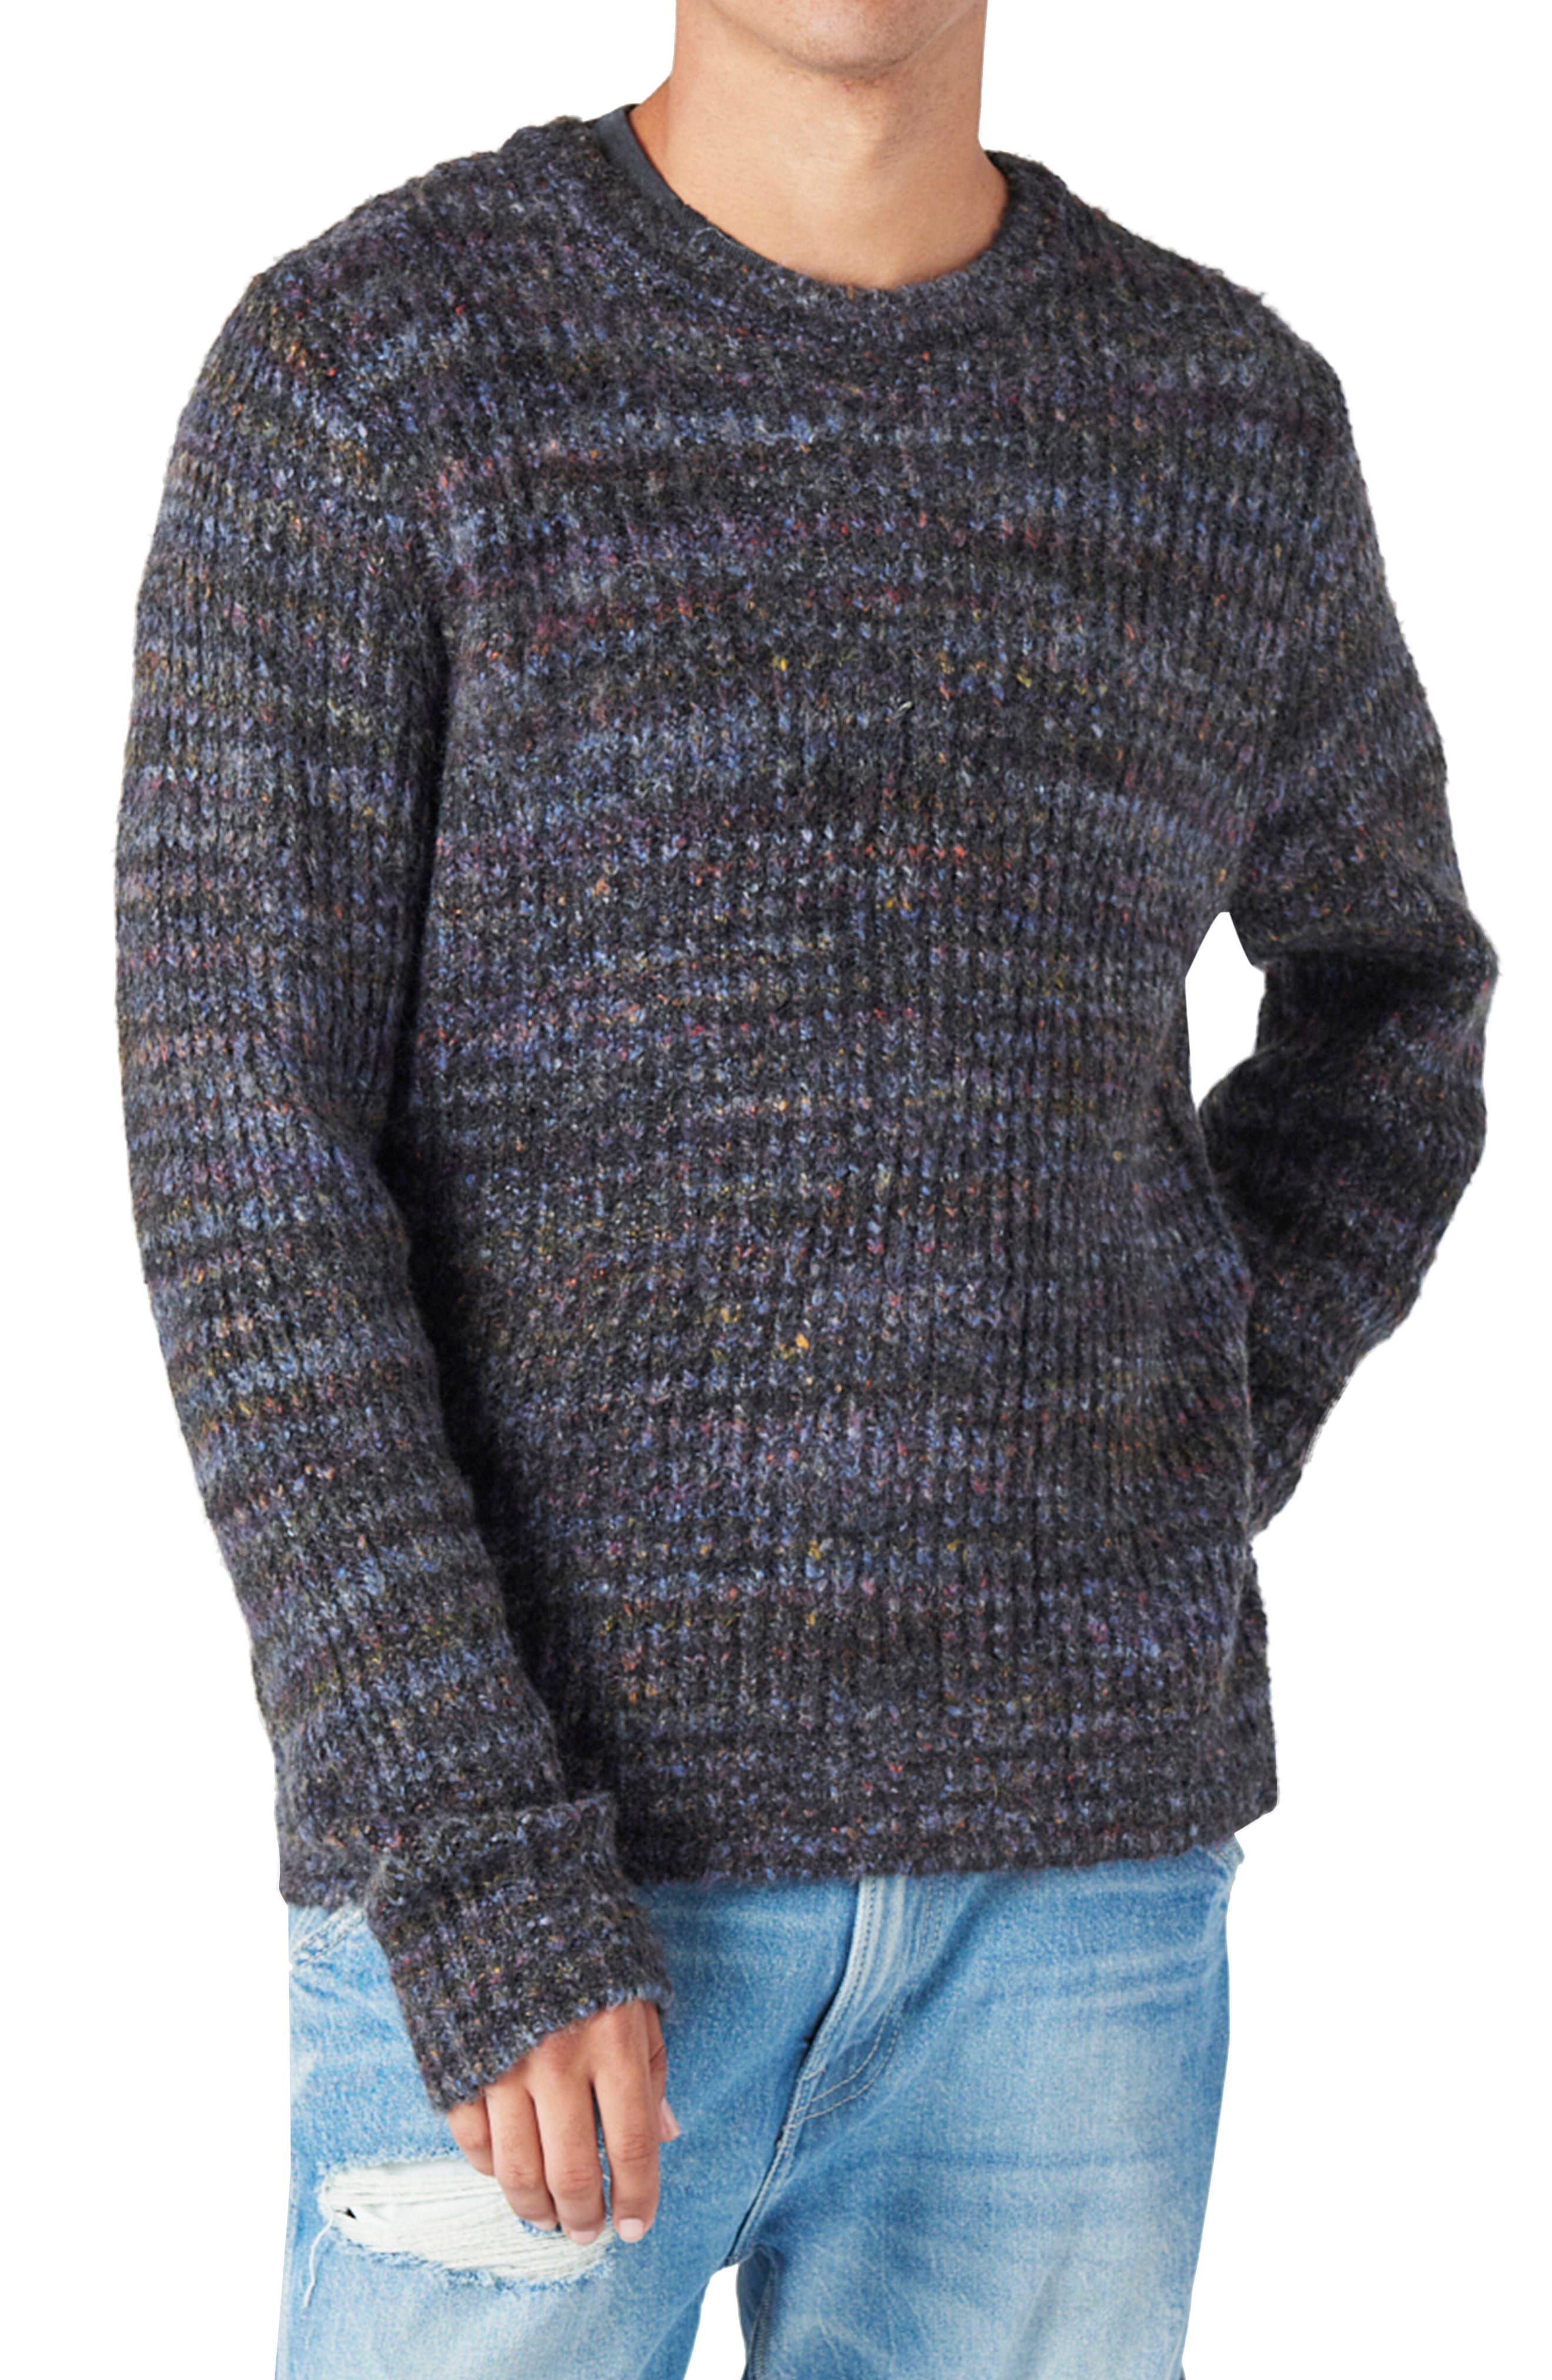 Etecredpow Mens Spliced Stylish Knit Crewneck Warm Pullover Jumper Sweaters 